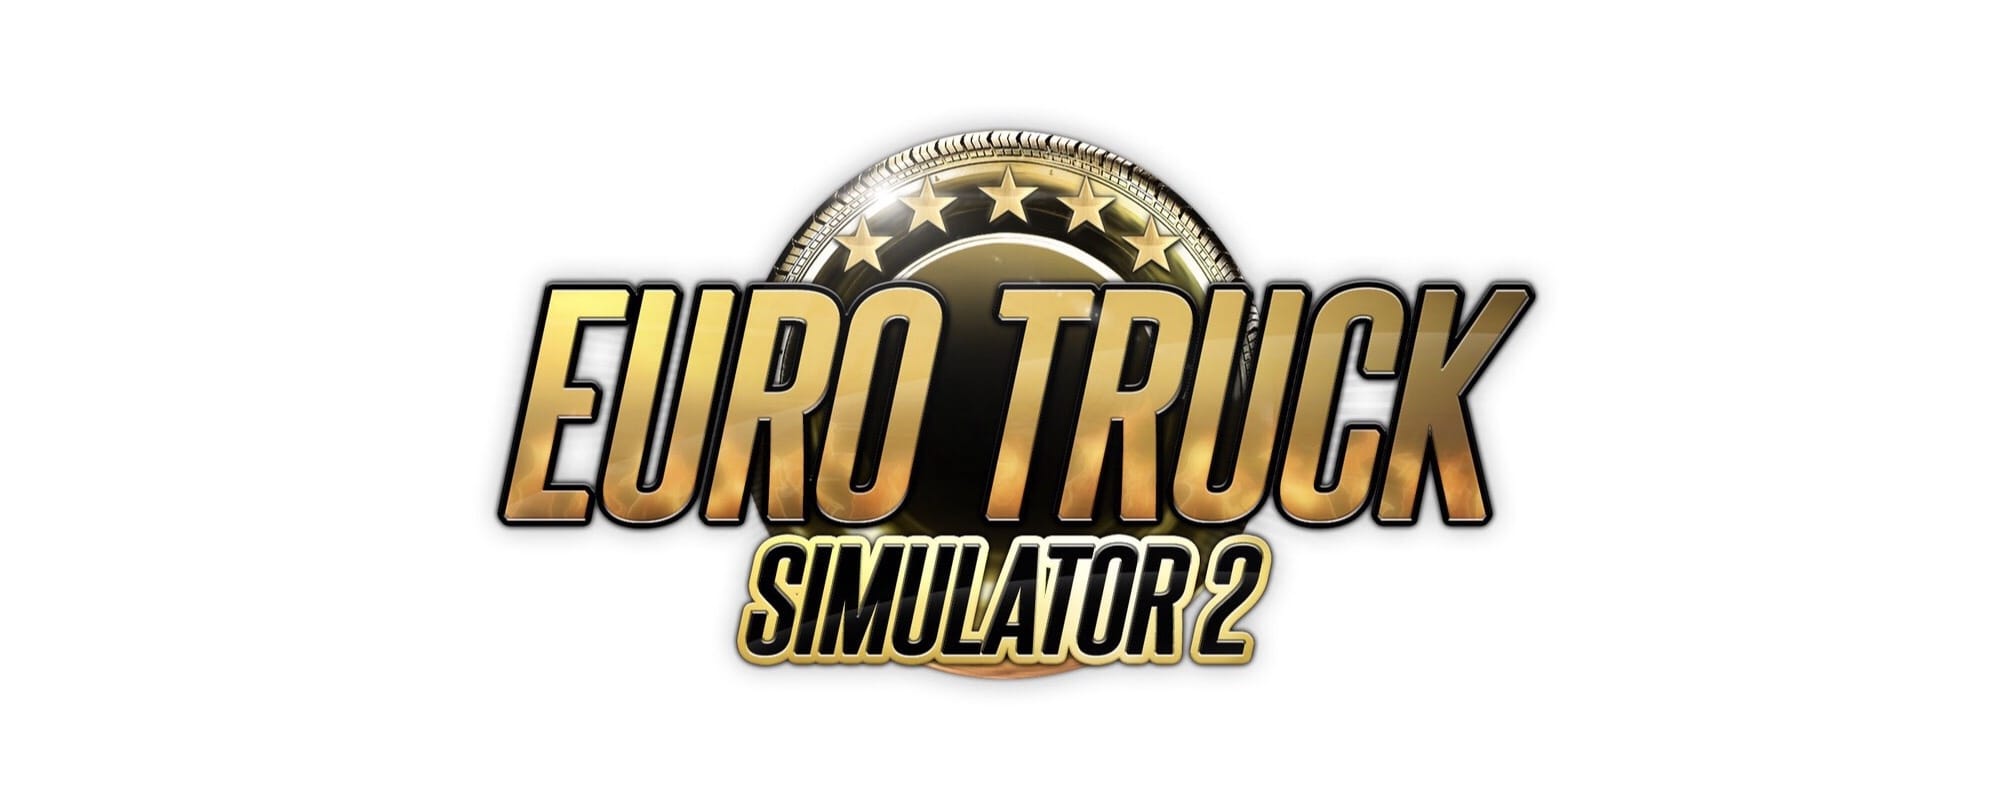 Стикерсв 2. Euro Truck Simulator 2. ETS 2 мультиплеер. Euro Truck Simulator 2 мультиплеер. Логотип евро трек симулятор 2.